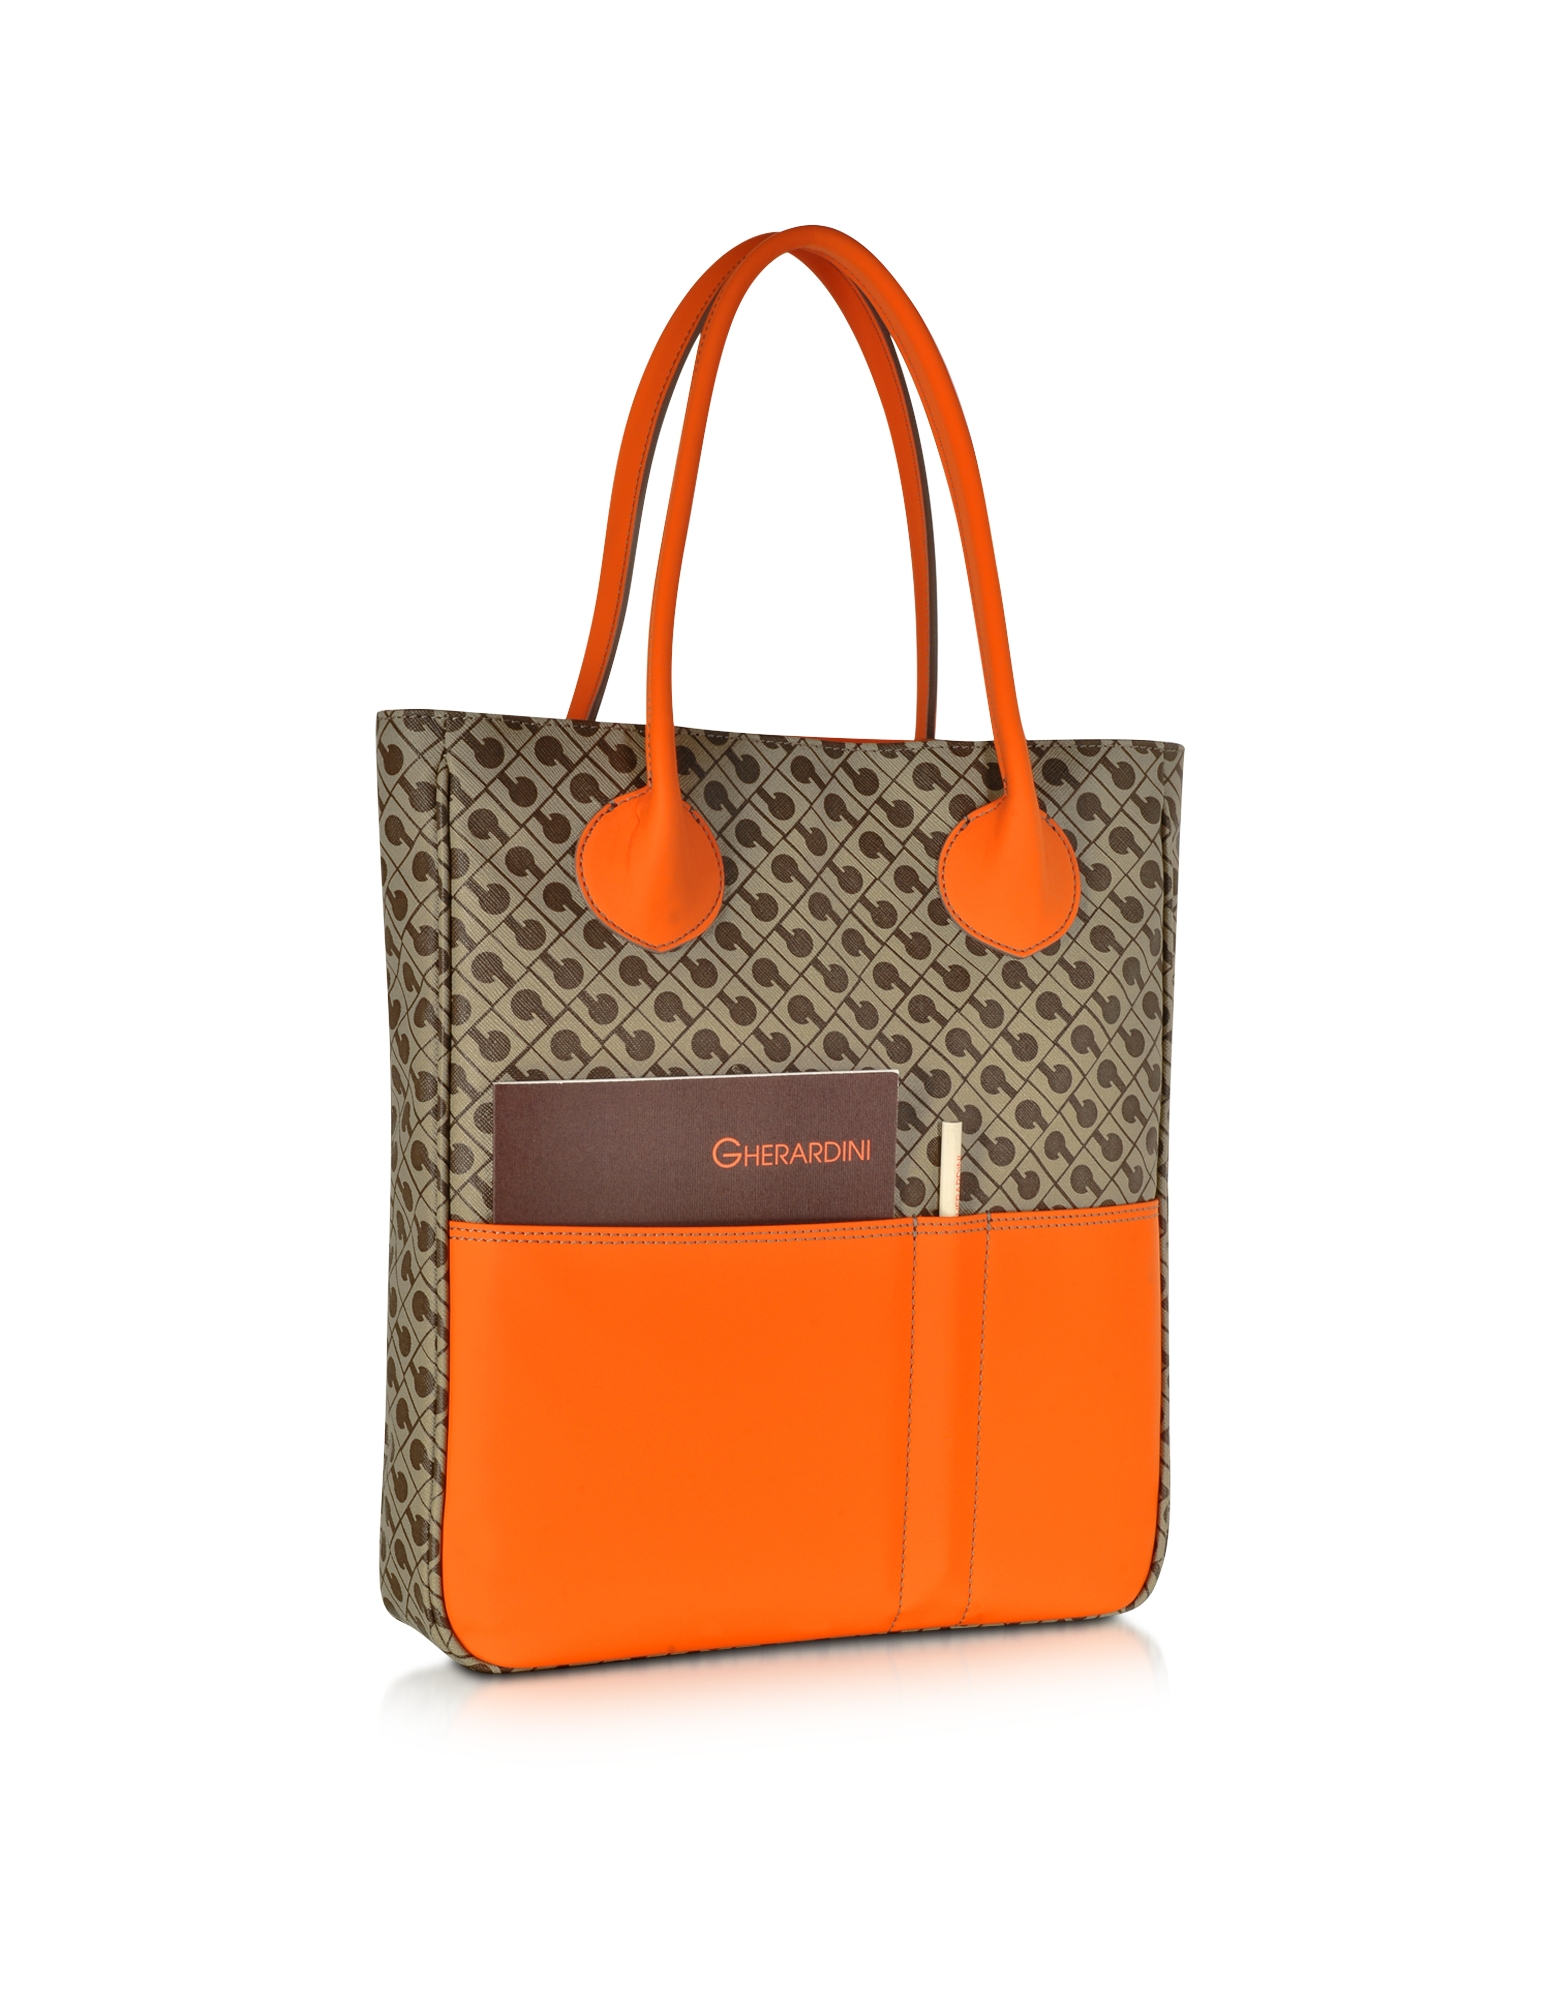 Lyst - Gherardini Julieta Millerighe Fabric And Mandarin Eco Leather Top Zip Tote Bag in Gray